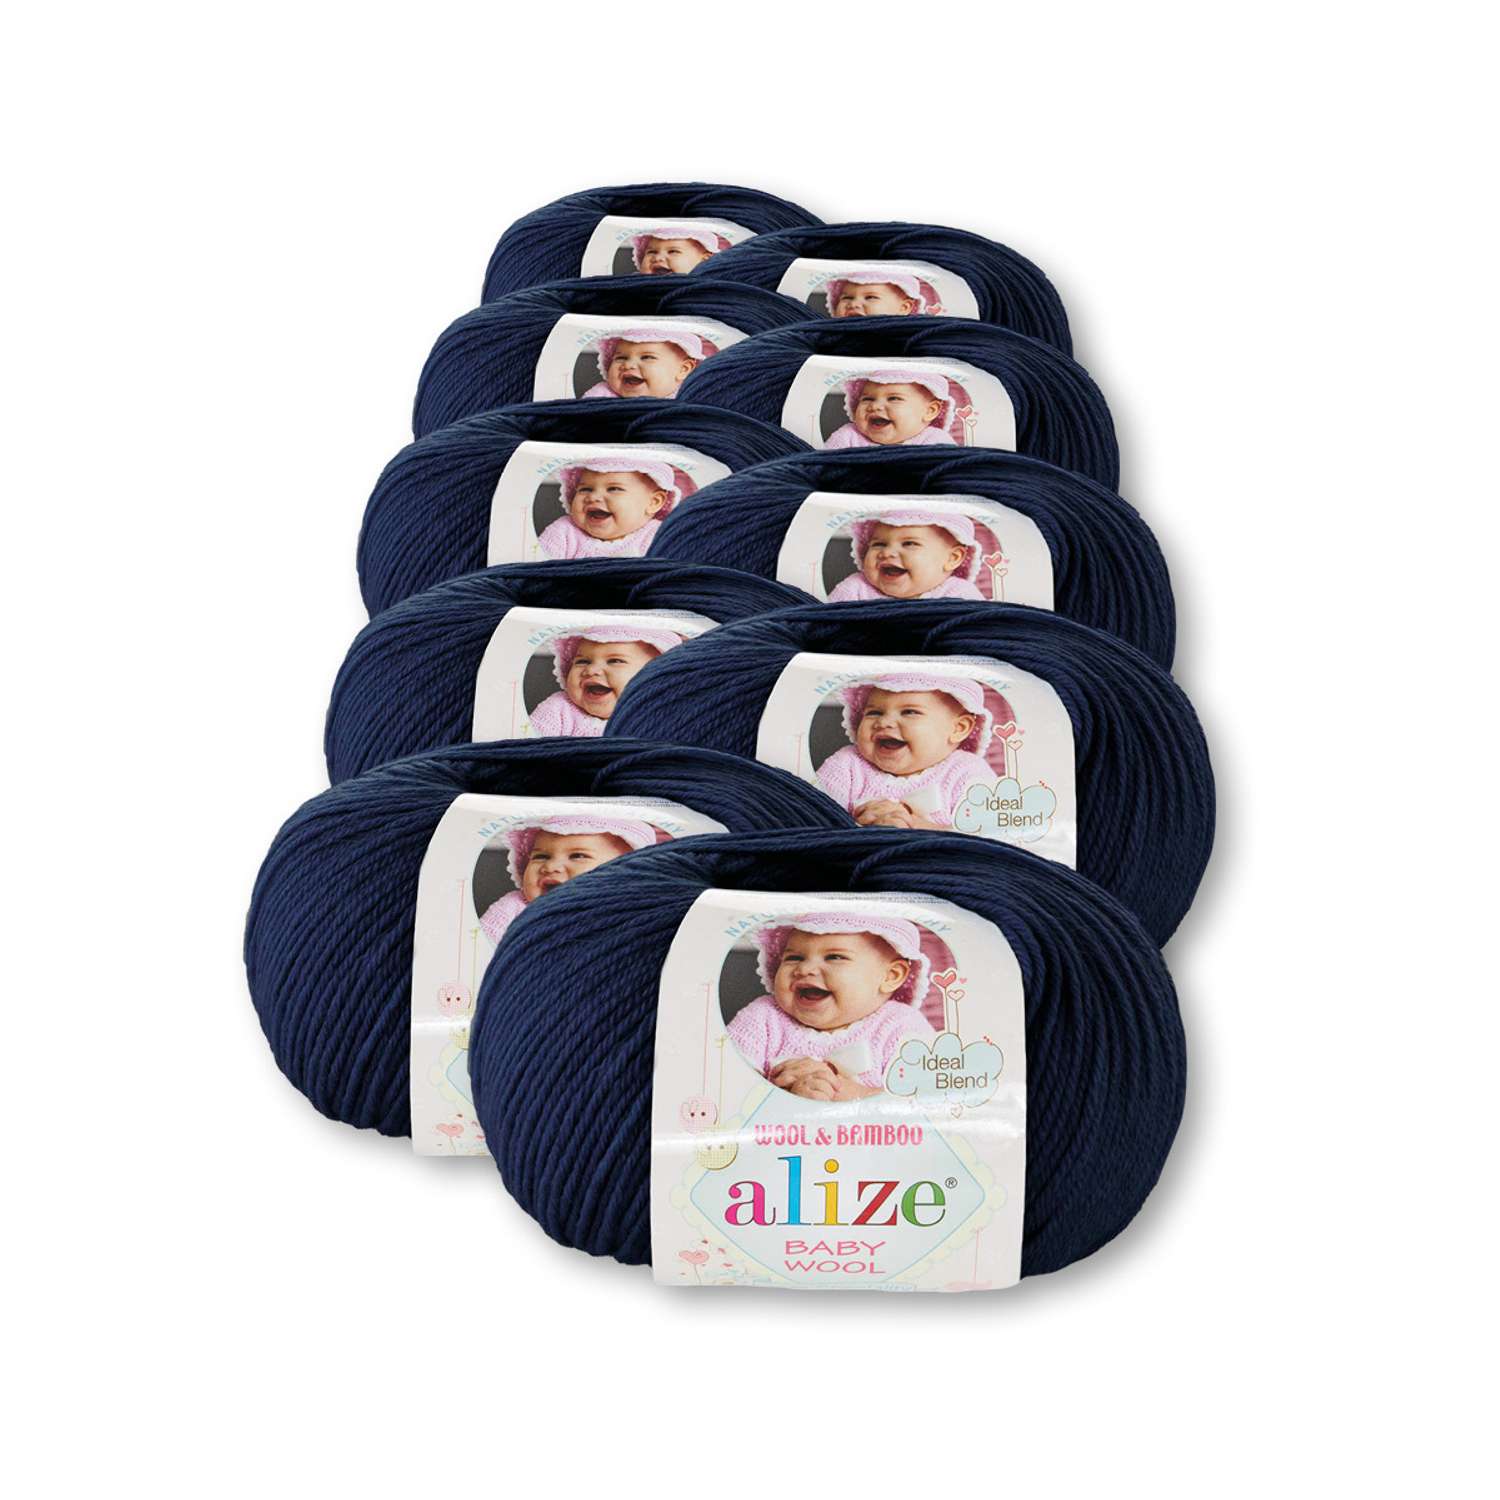 Пряжа для вязания Alize baby wool бамбук шерсть акрил мягкая 50 гр 175 м 58 темно-синий 10 мотков - фото 2